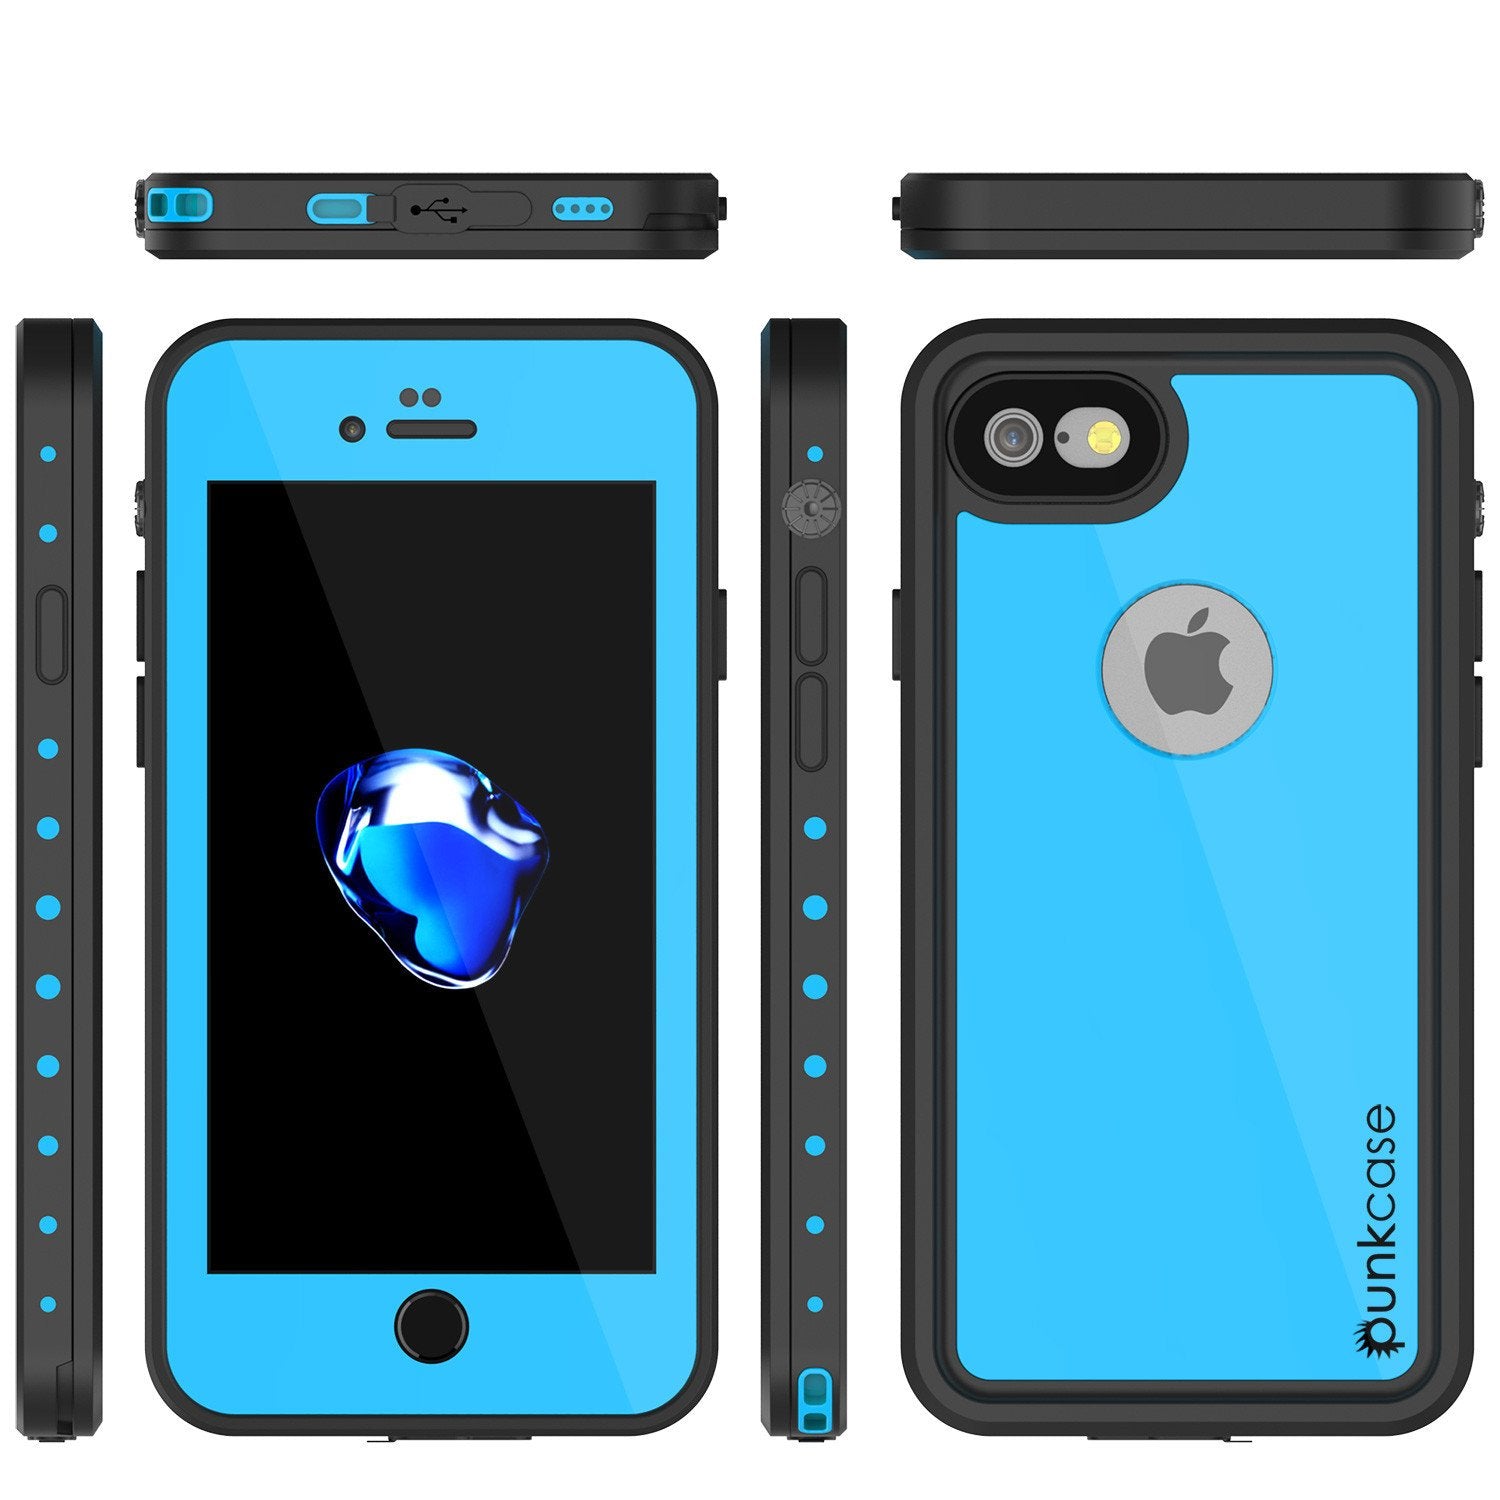 iPhone 7 Waterproof Case, Punkcase [Light Blue] [StudStar Series] [Slim Fit] [IP68 Certified] [Shockproof] [Dirtproof] [Snowproof] Armor Cover for Apple iPhone 7 & 7s